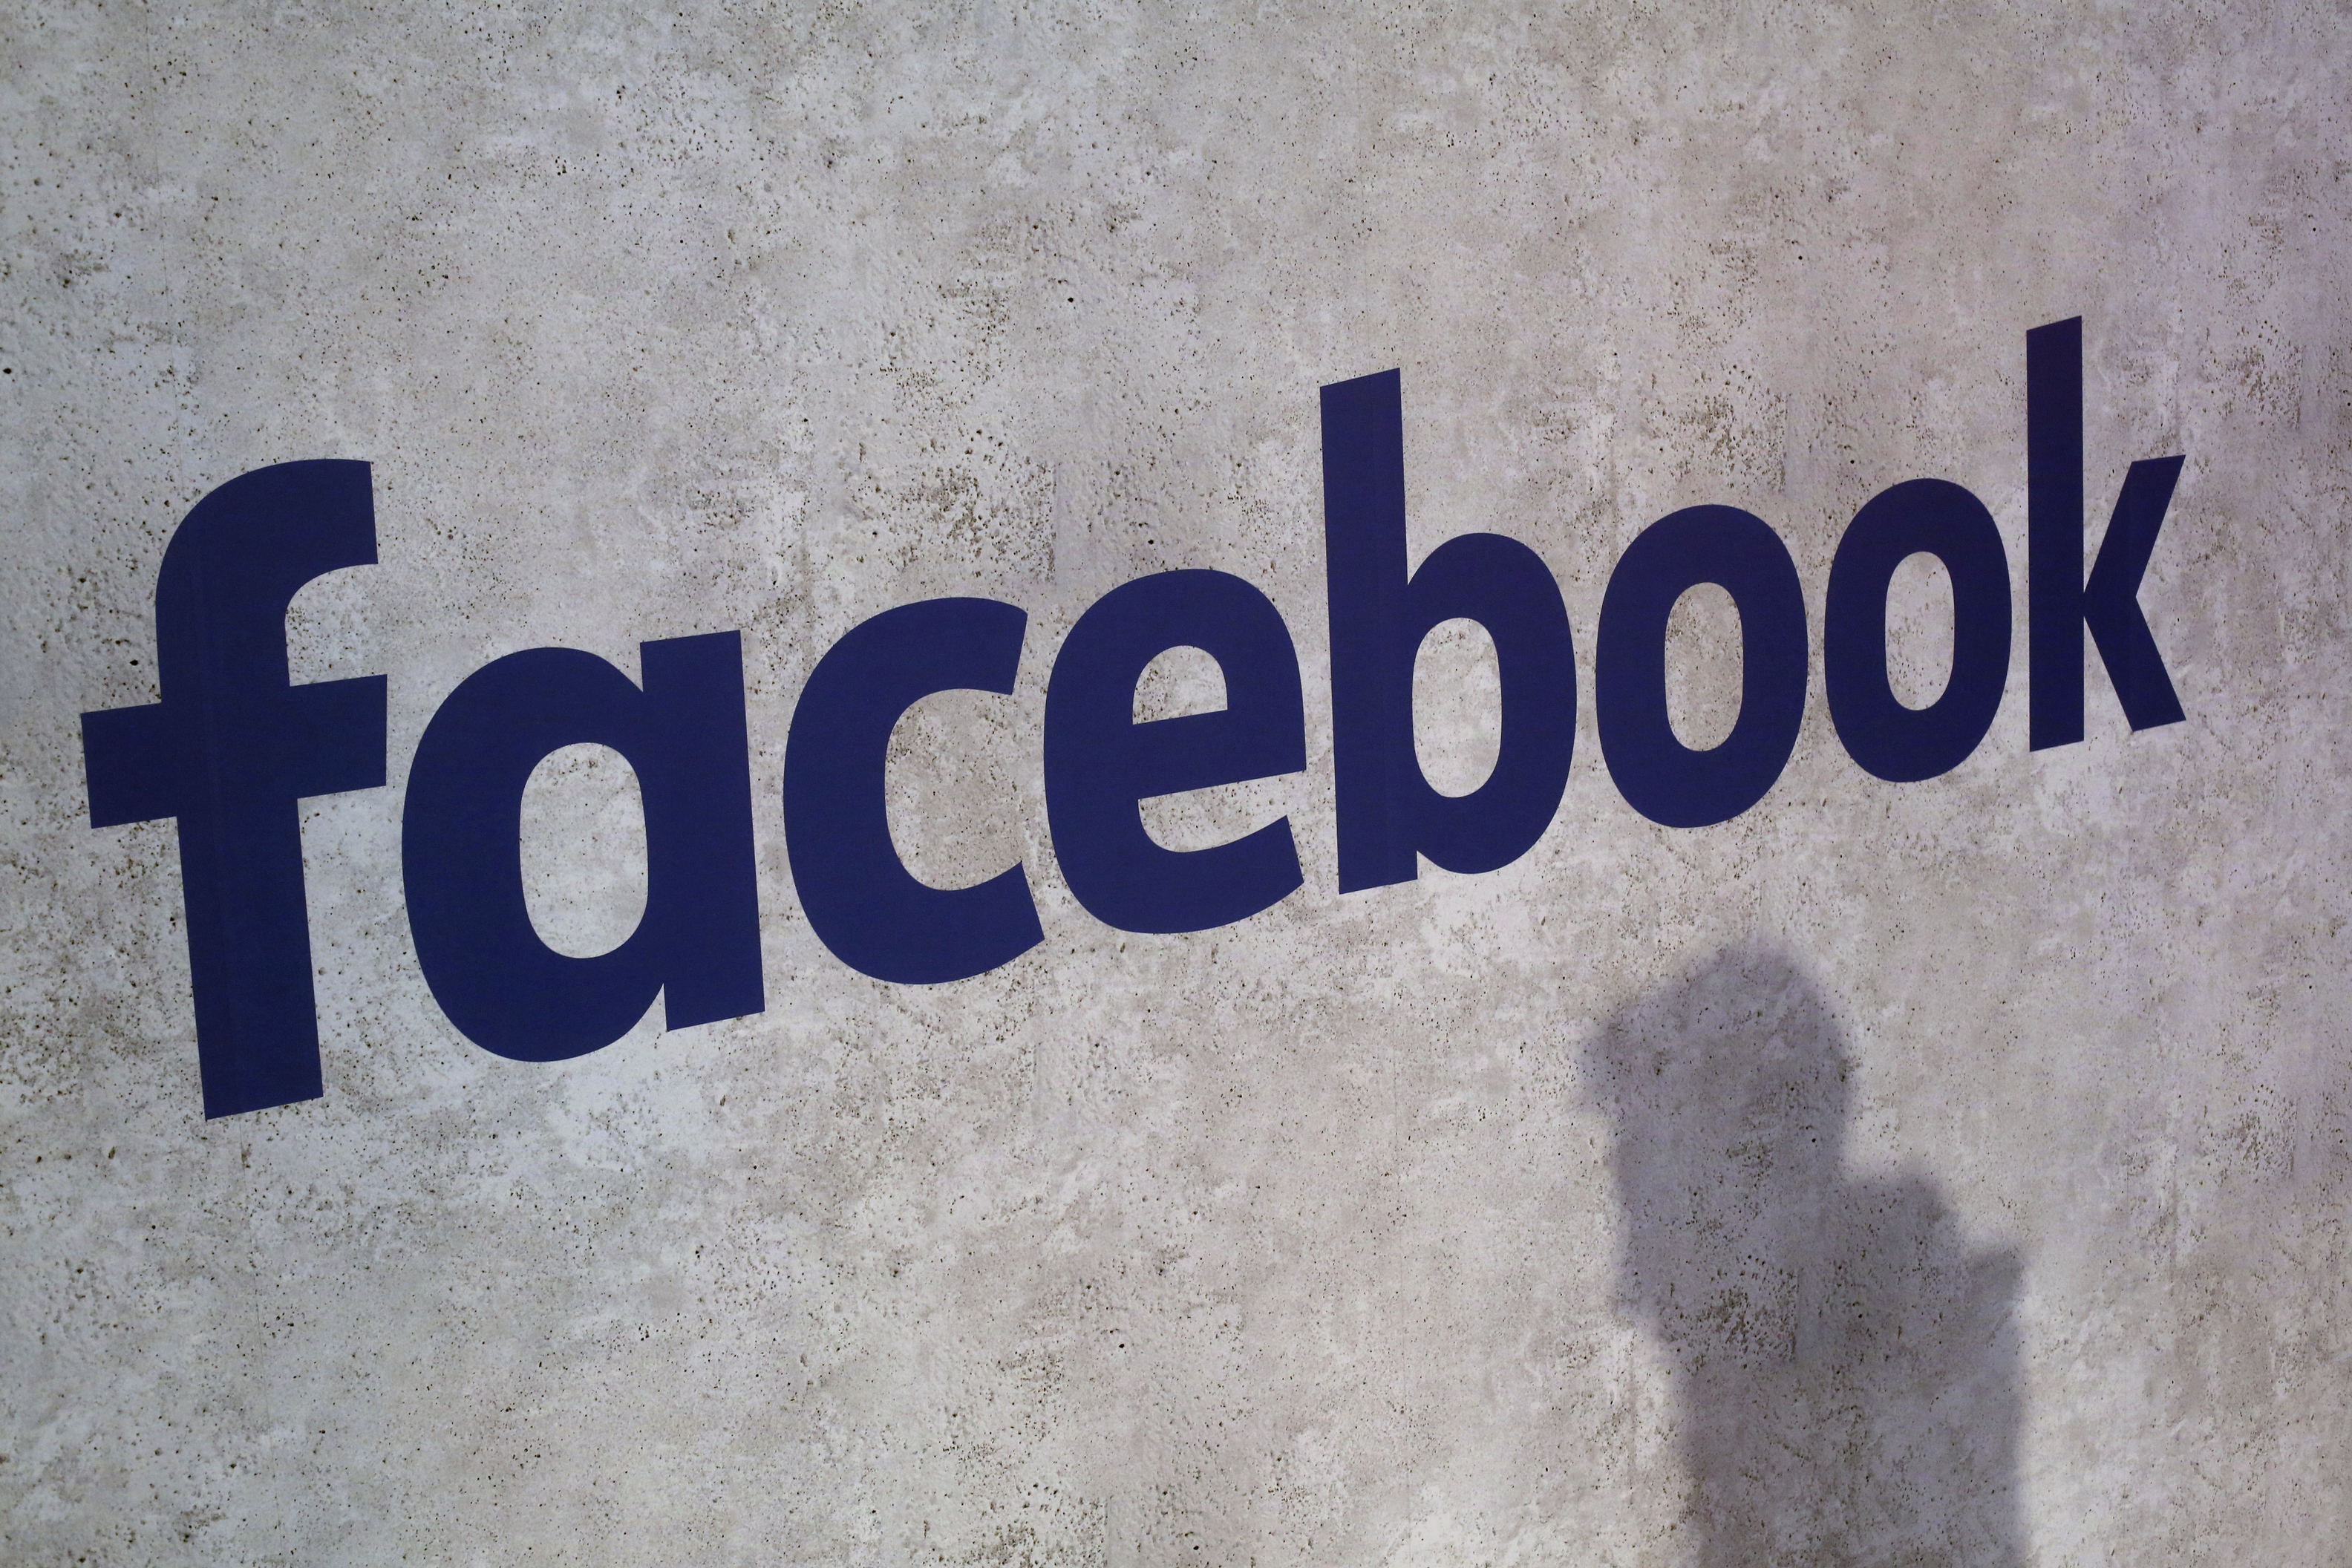 UK lawmakers slam Facebook, recommend stiffer regulation